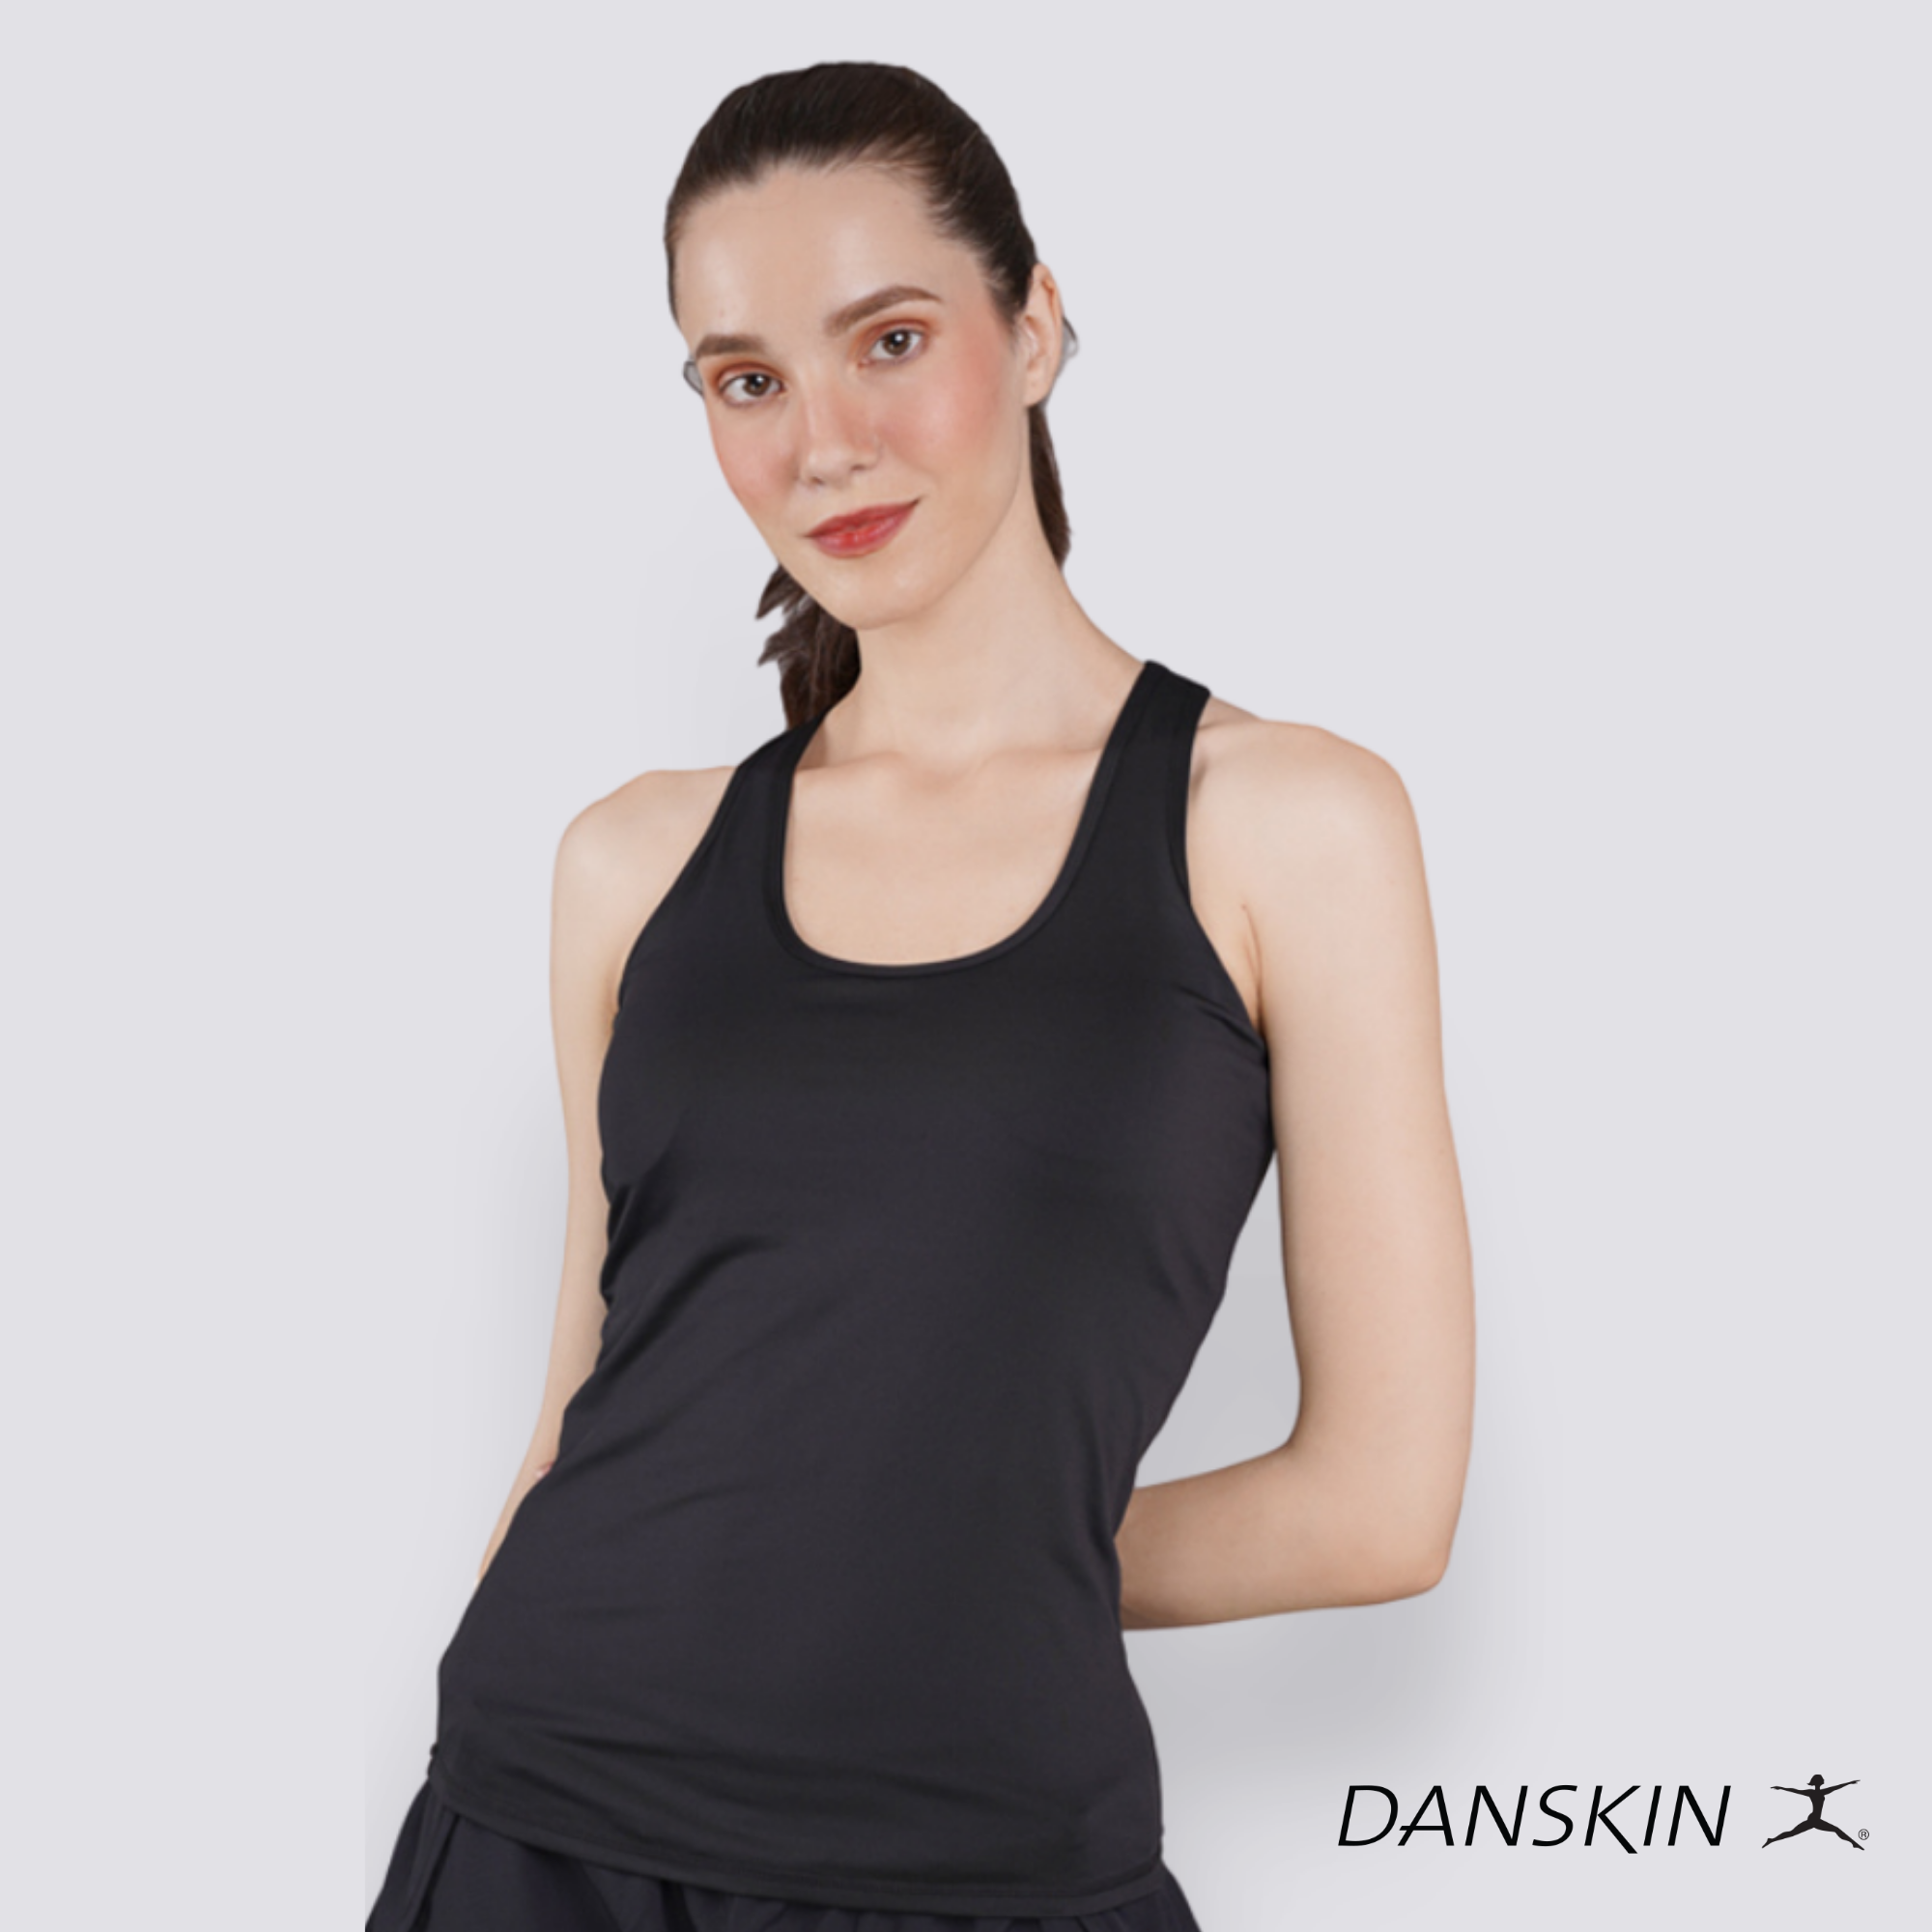 Danskin Athletic Wear Tank Top and Cropped Leggings Women's Size Medium